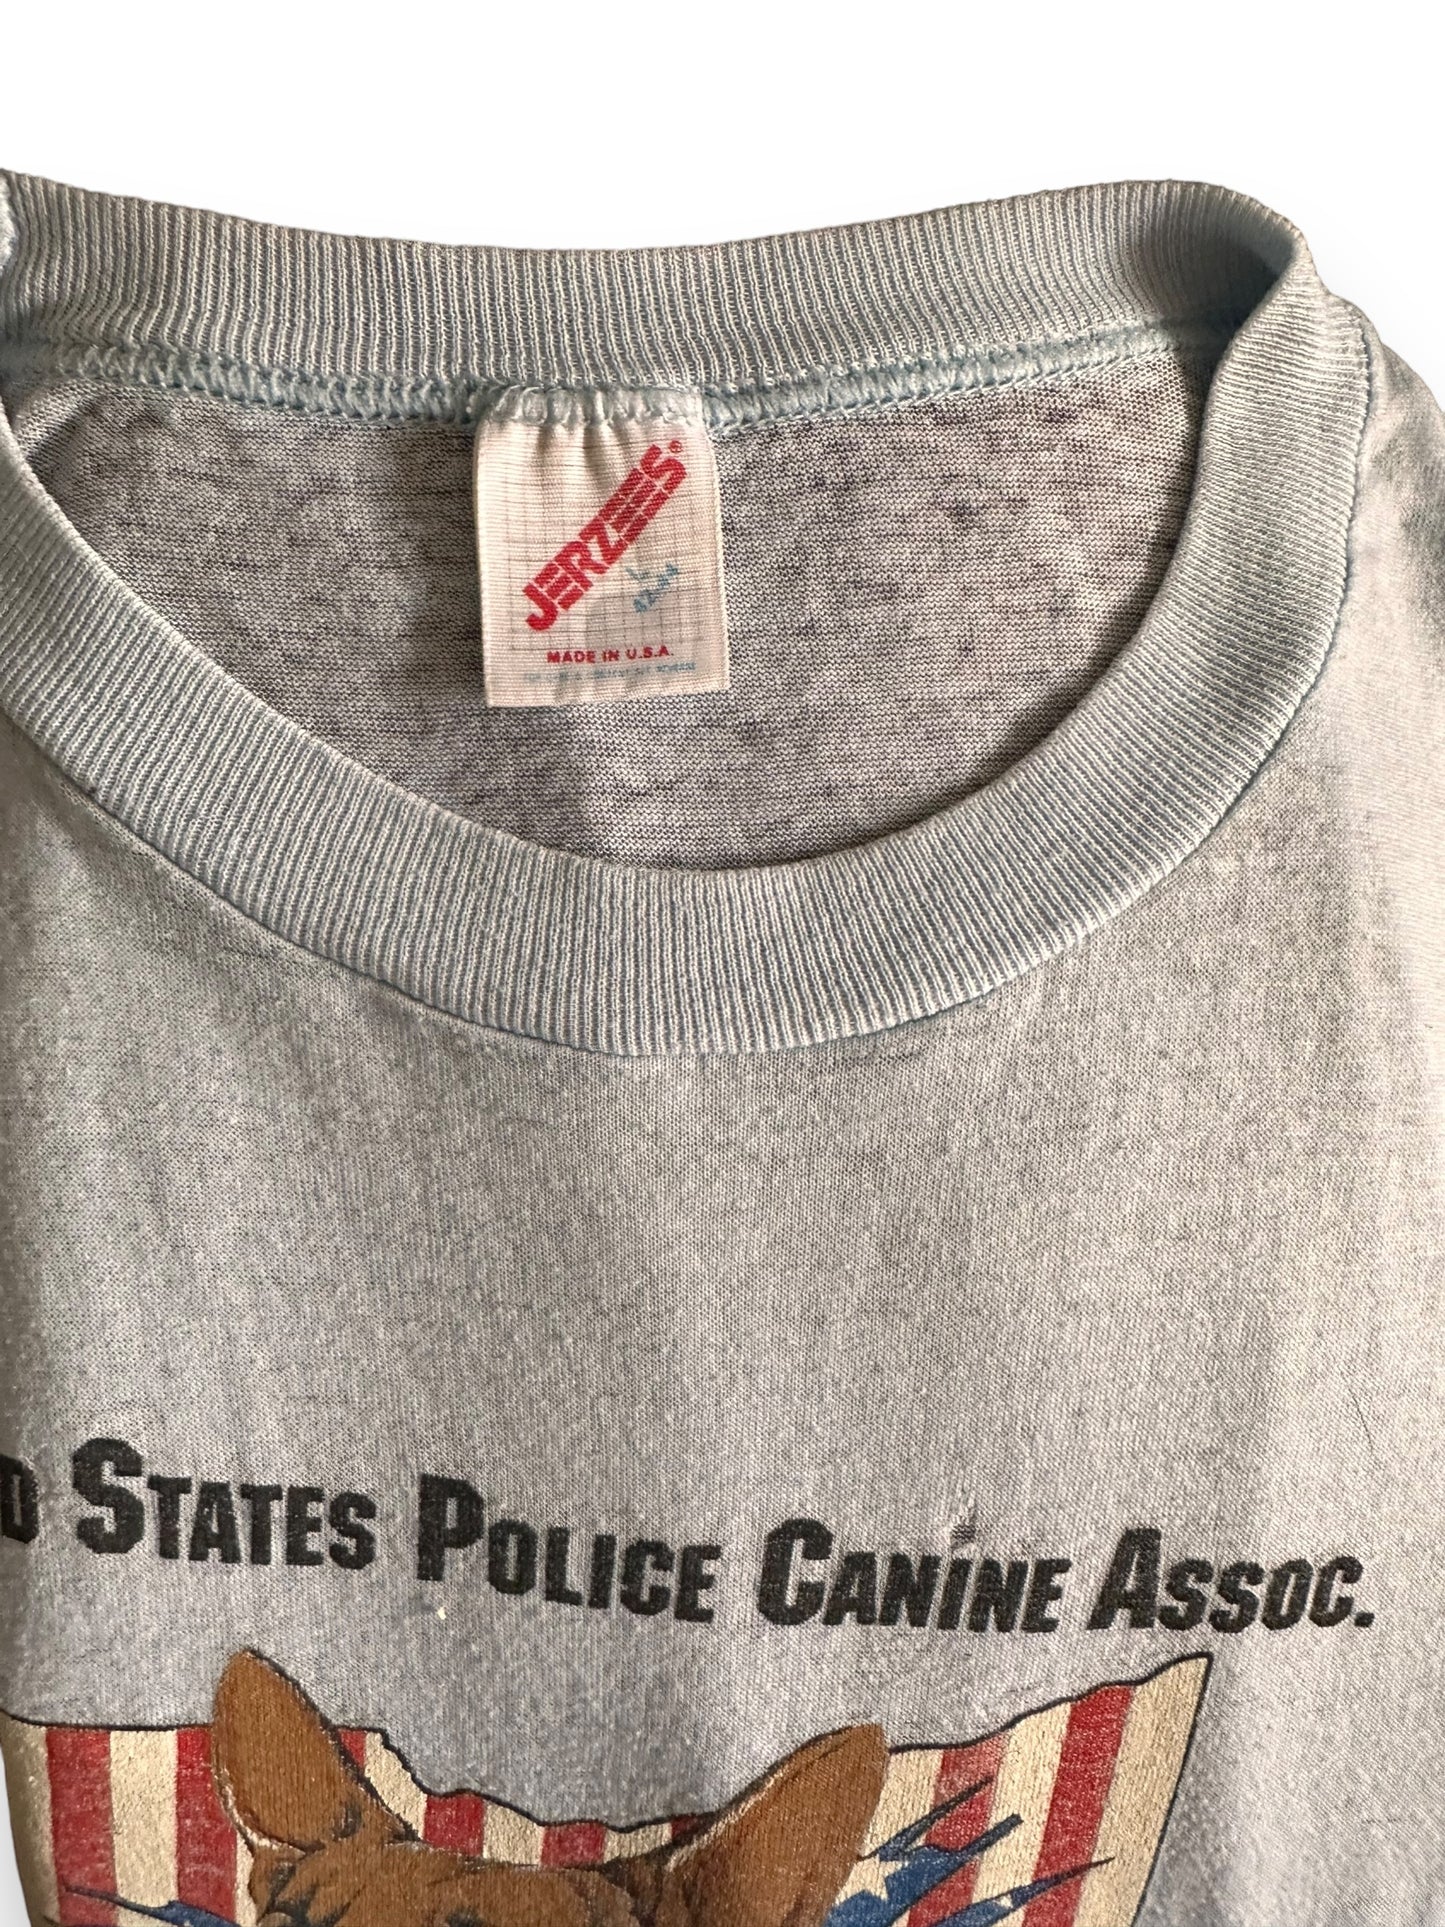 Tag View of Vintage US Police Canine Association Tee SZ L | Vintage German Shepherd T-Shirts Seattle | Barn Owl Vintage Clothing Seattle